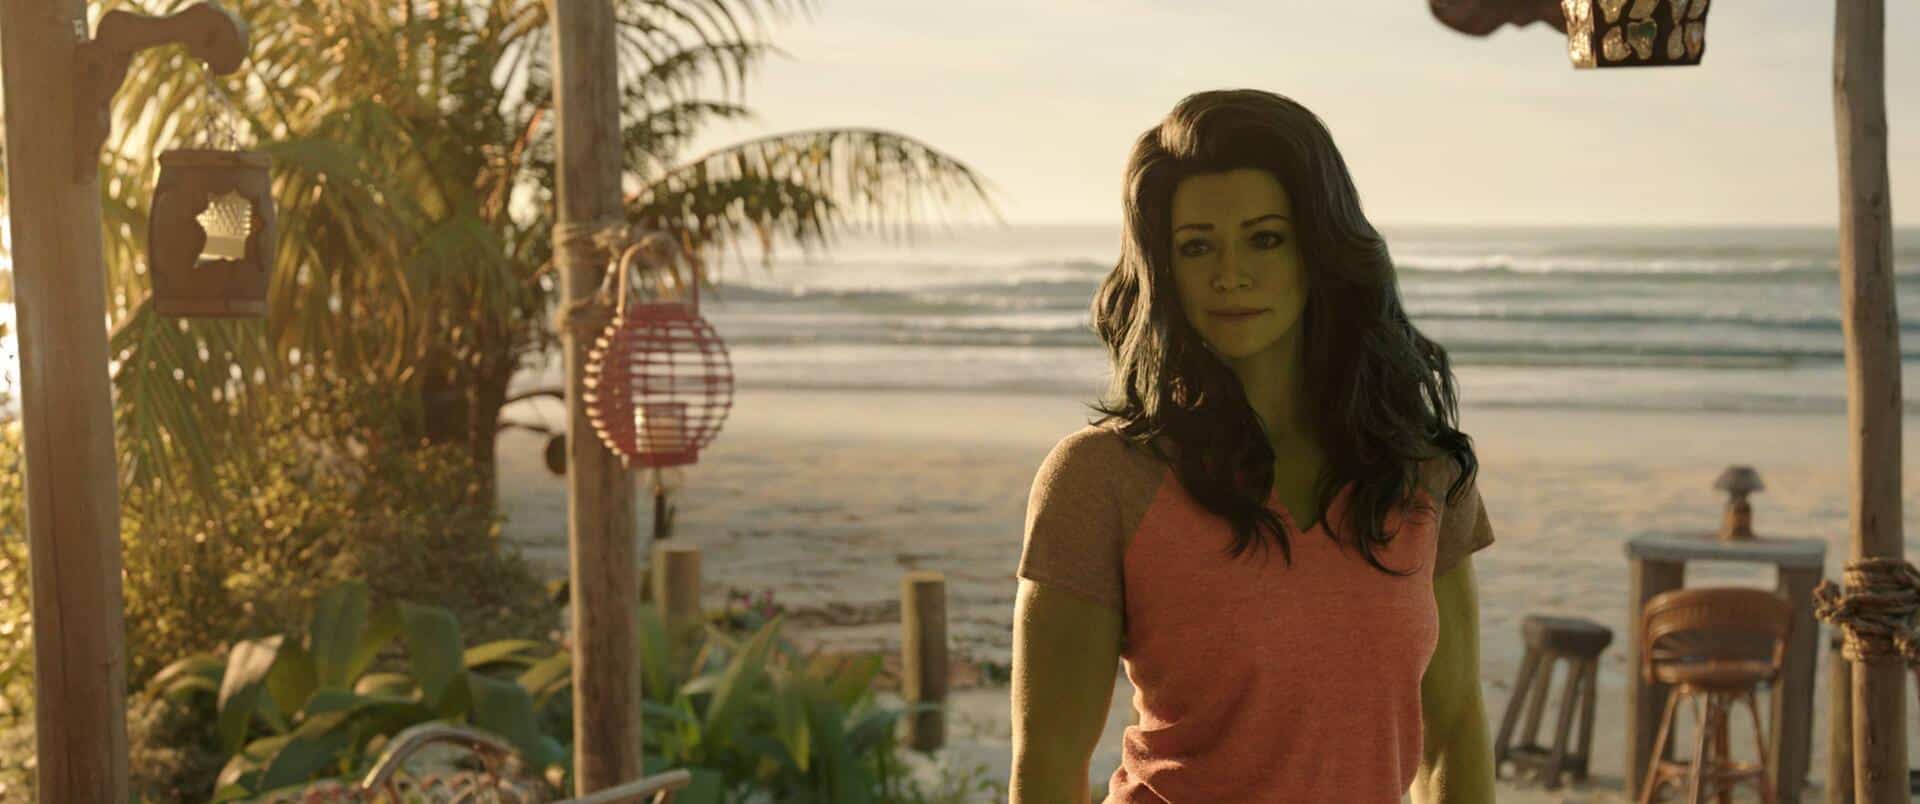 She-Hulk: Attorney at Law episode 1 review premiere MCU Marvel Cinematic Universe Jen Walters show identity crisis conflicting narrative obligations Tatiana Maslany Tatiana Maslany